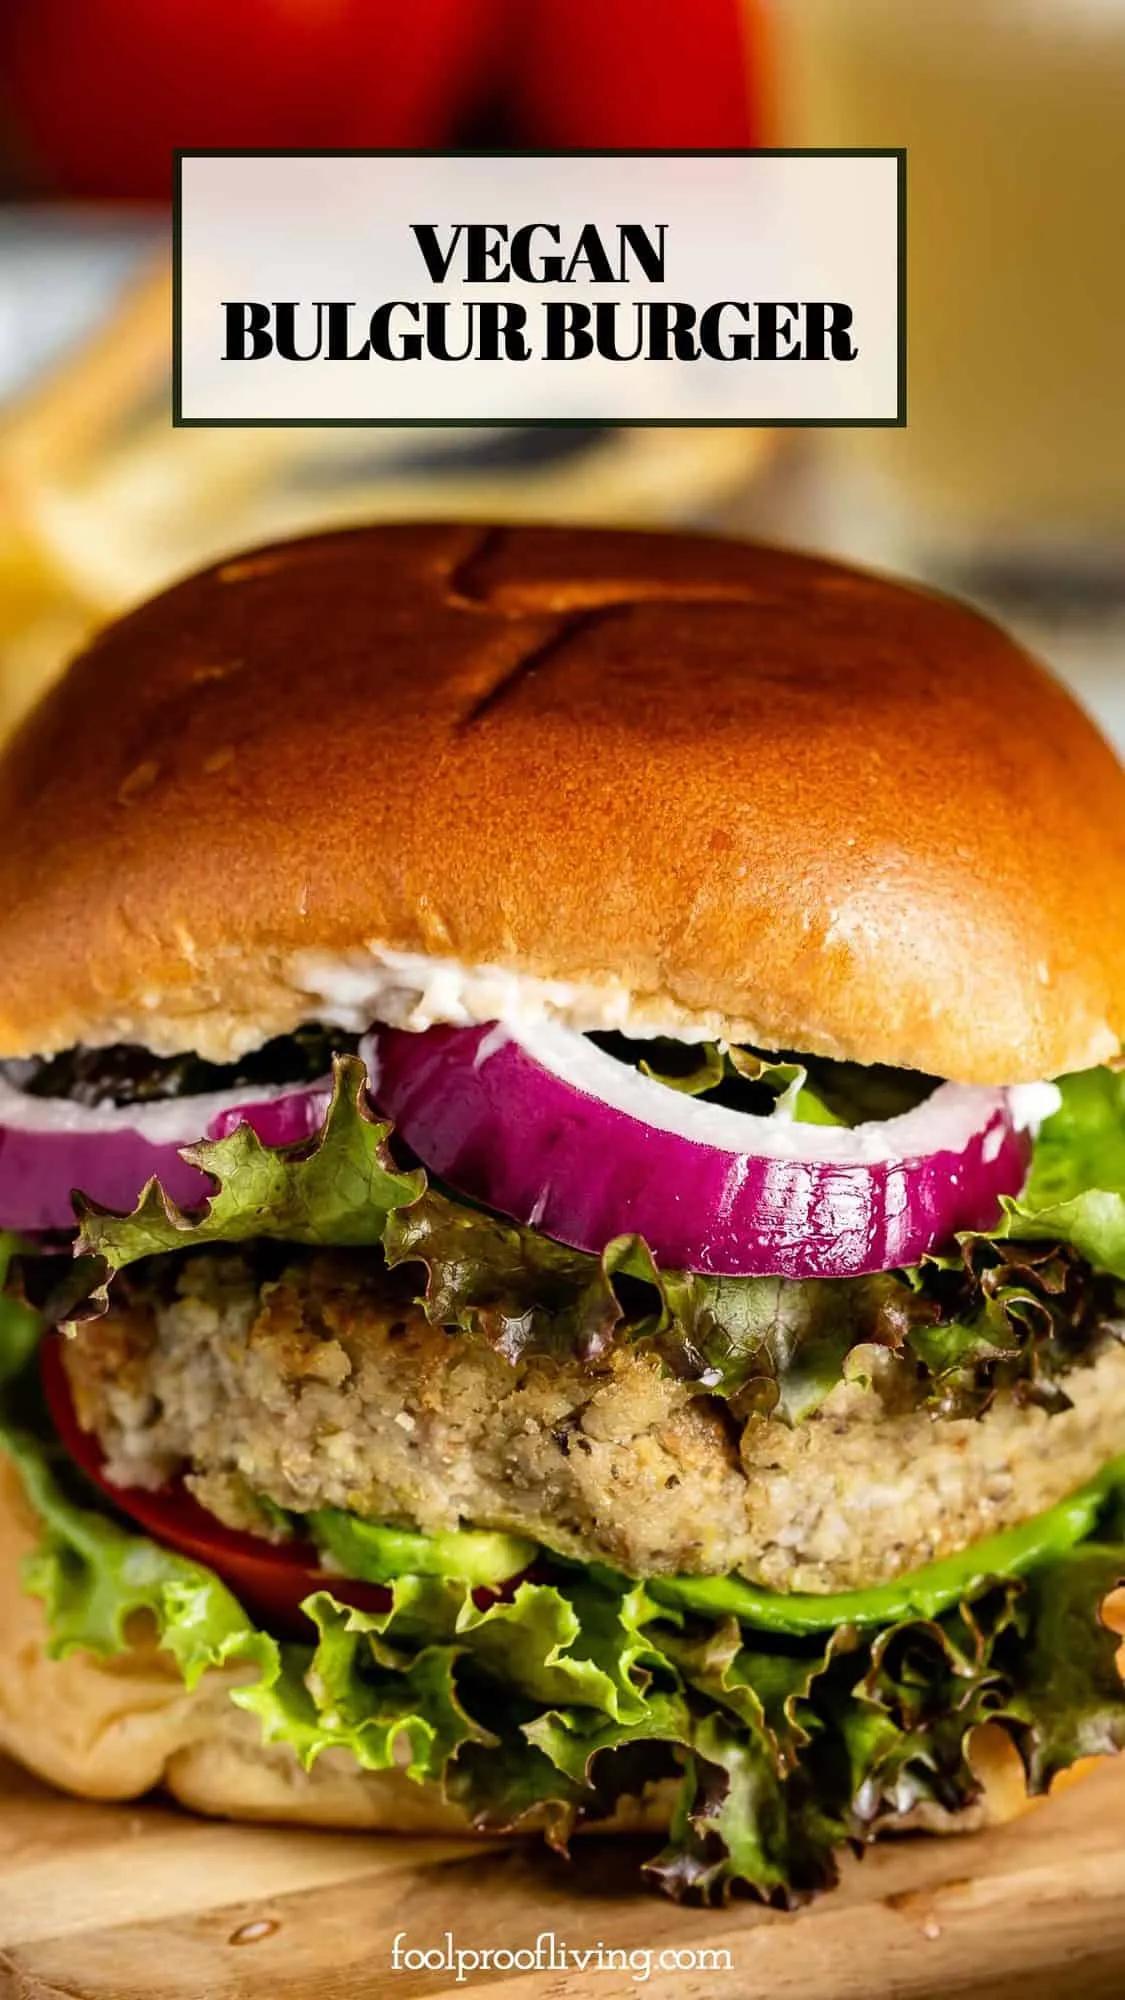 Bulgur Burger with Lentils (Vegan Recipe) - Foolproof Living